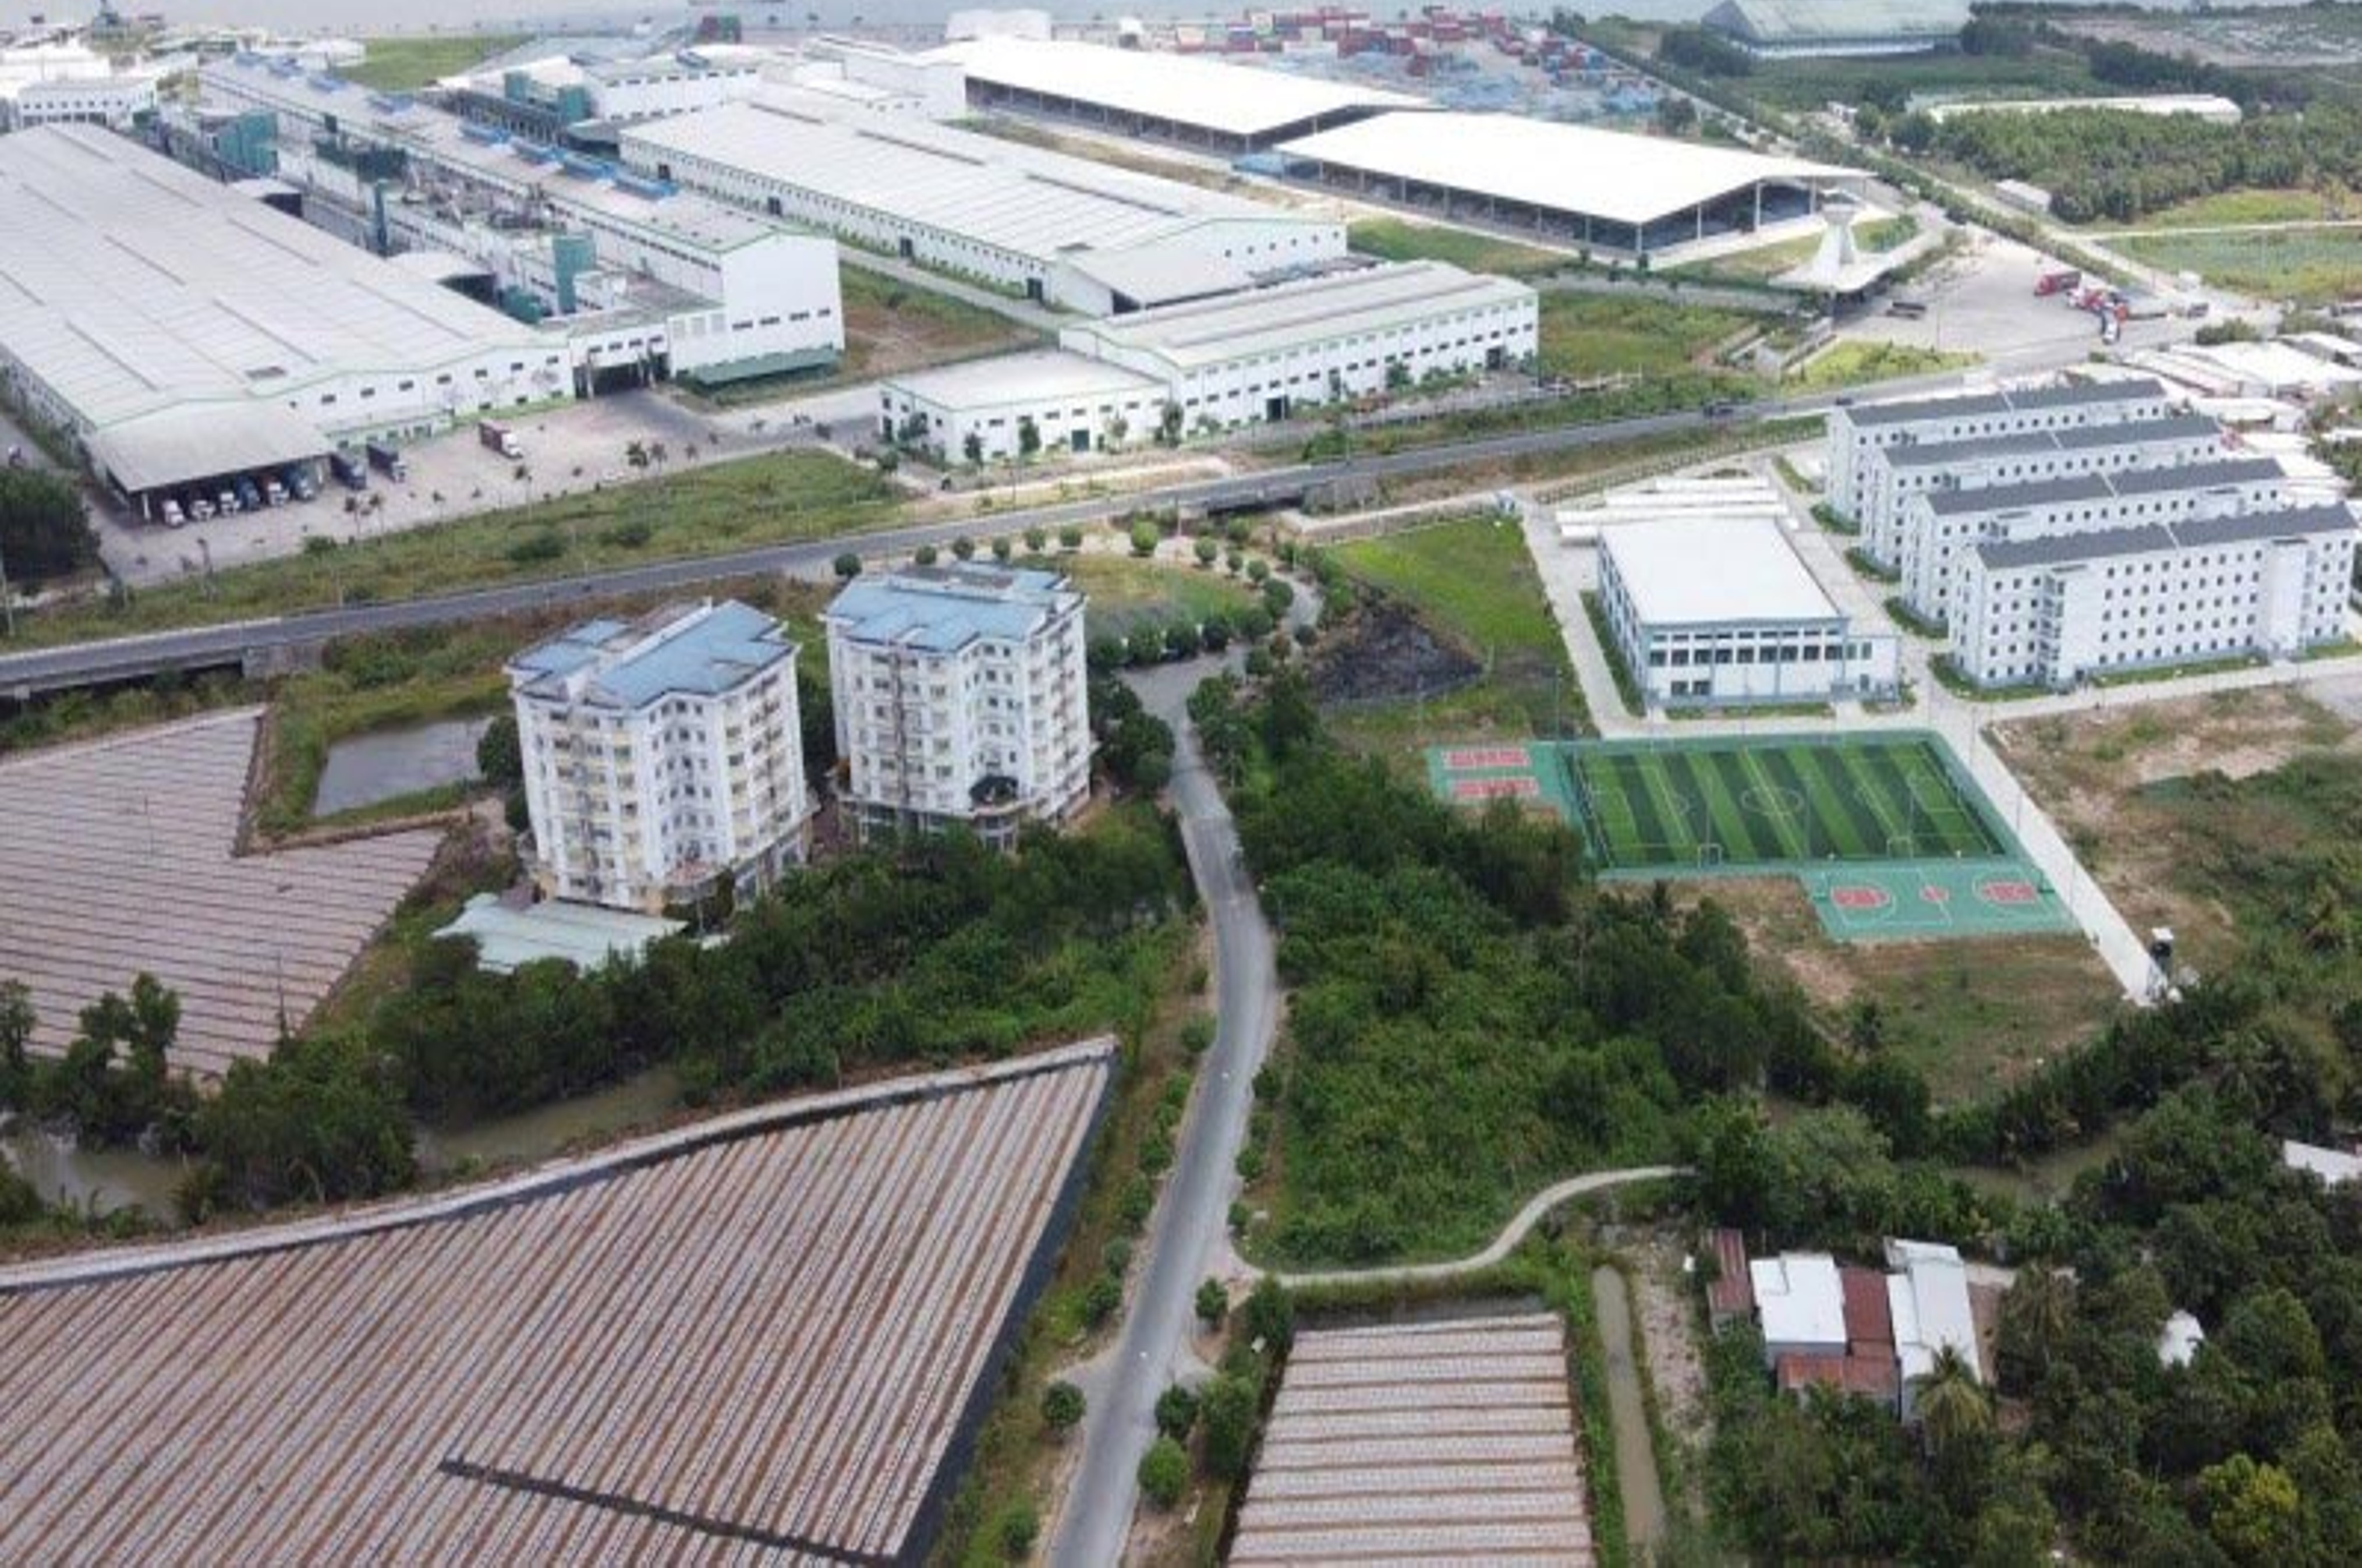 Song Hau Industrial Park